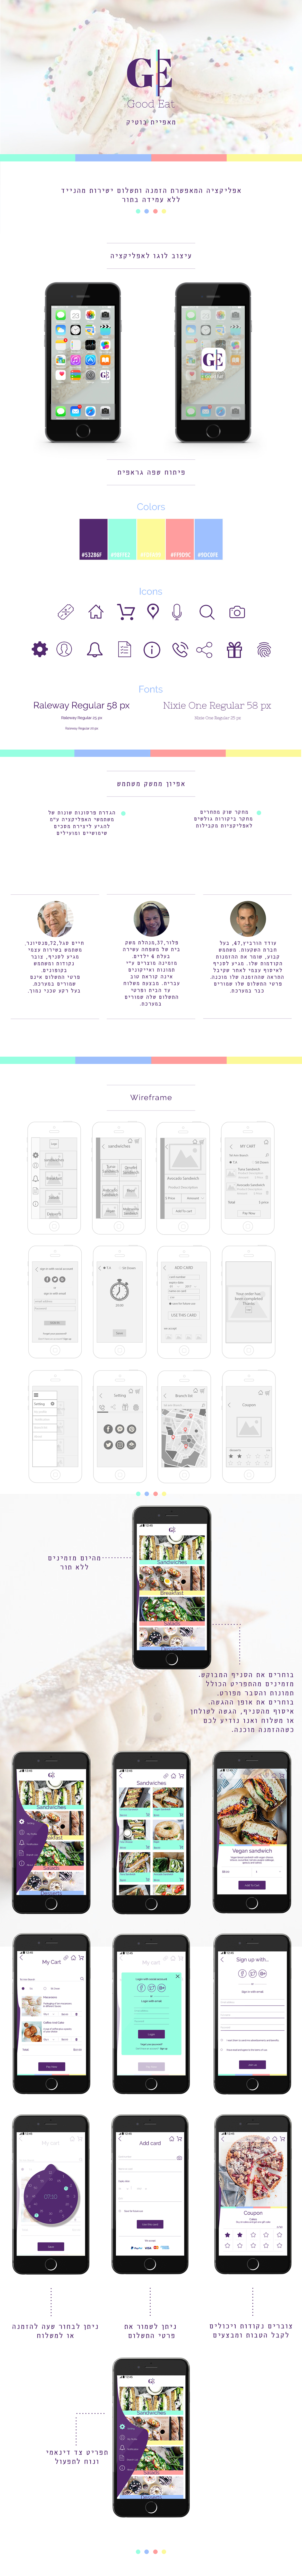 app user experience mobile UI ux eat design